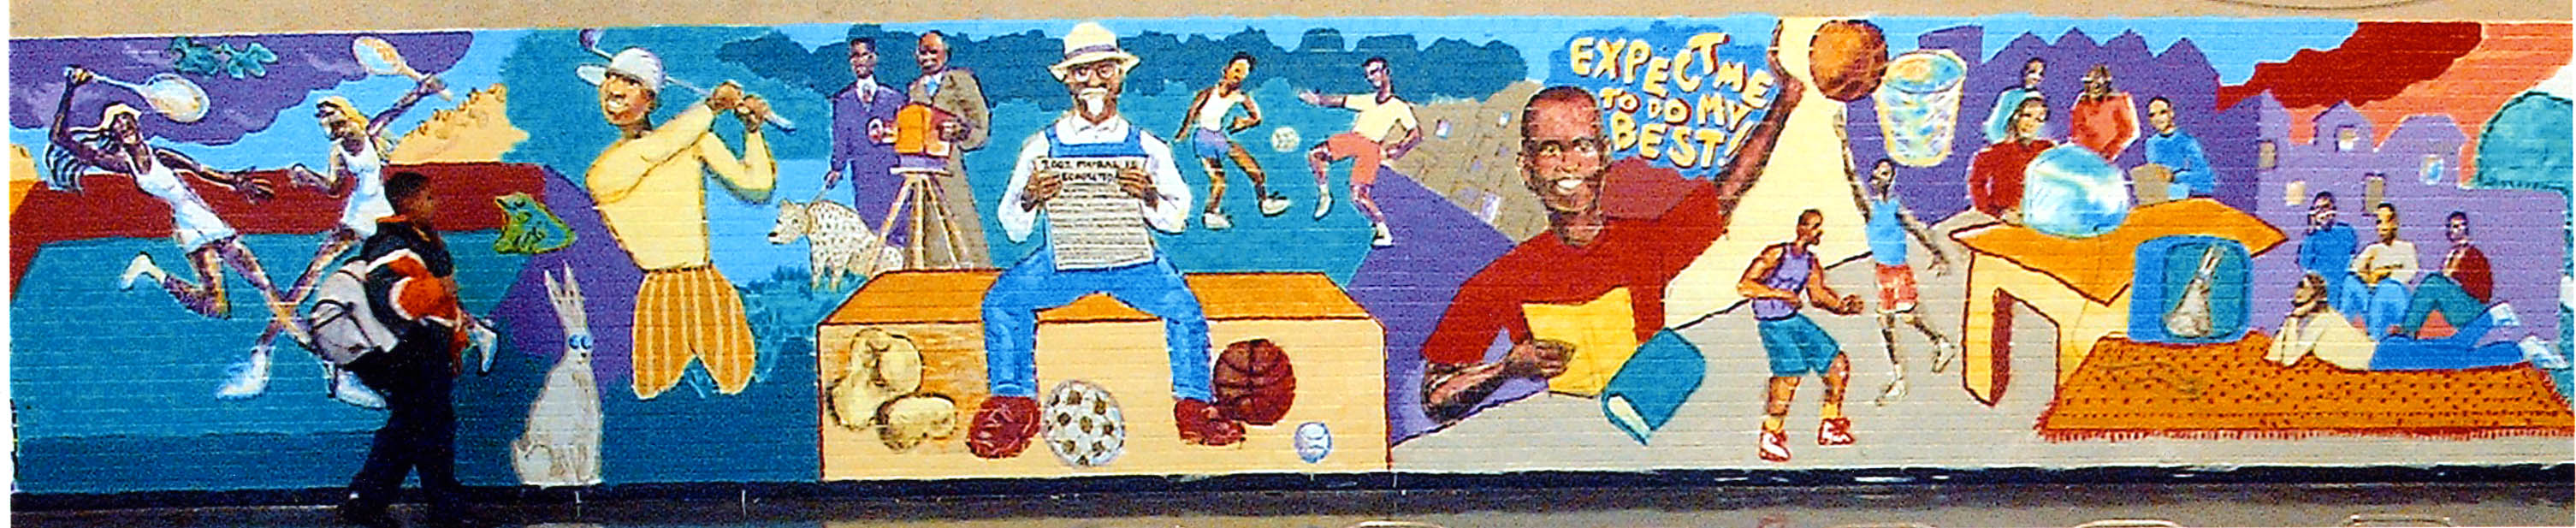 Trinity Mural 2002